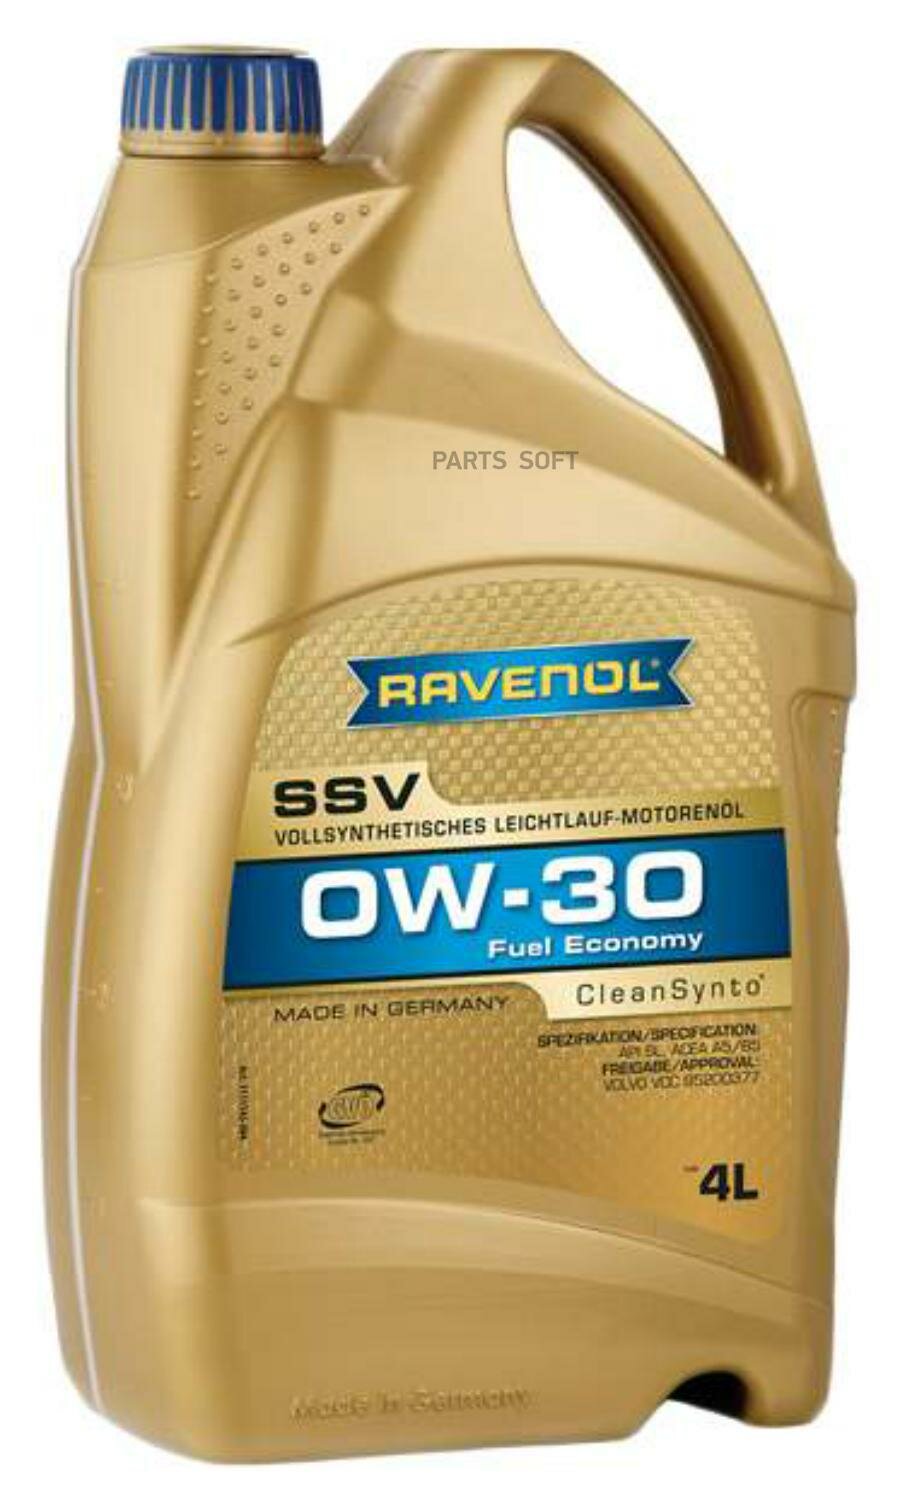 Синтетическое моторное масло RAVENOL SSV SAE 0W-30